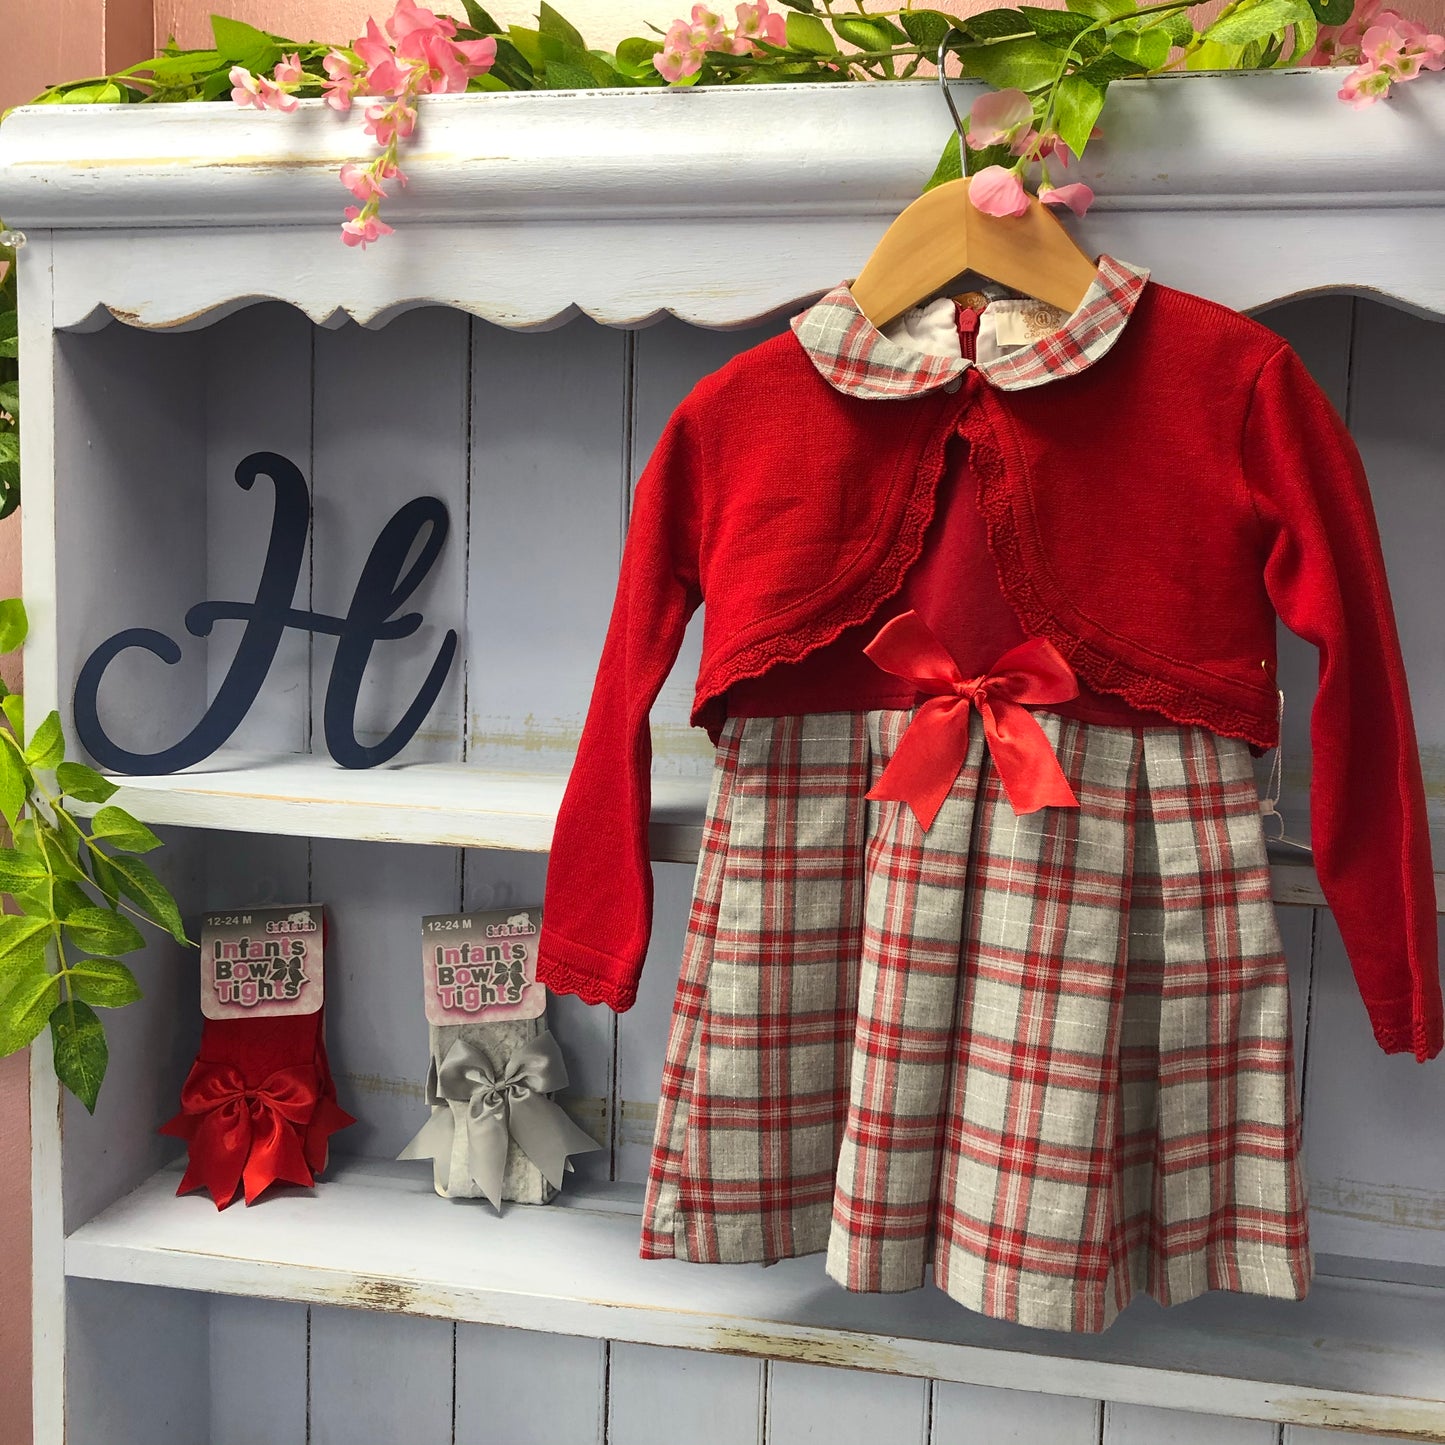 “Gala” Grey & Red Check Dress with Bolero Cardigan - Hetty's Baby Boutique